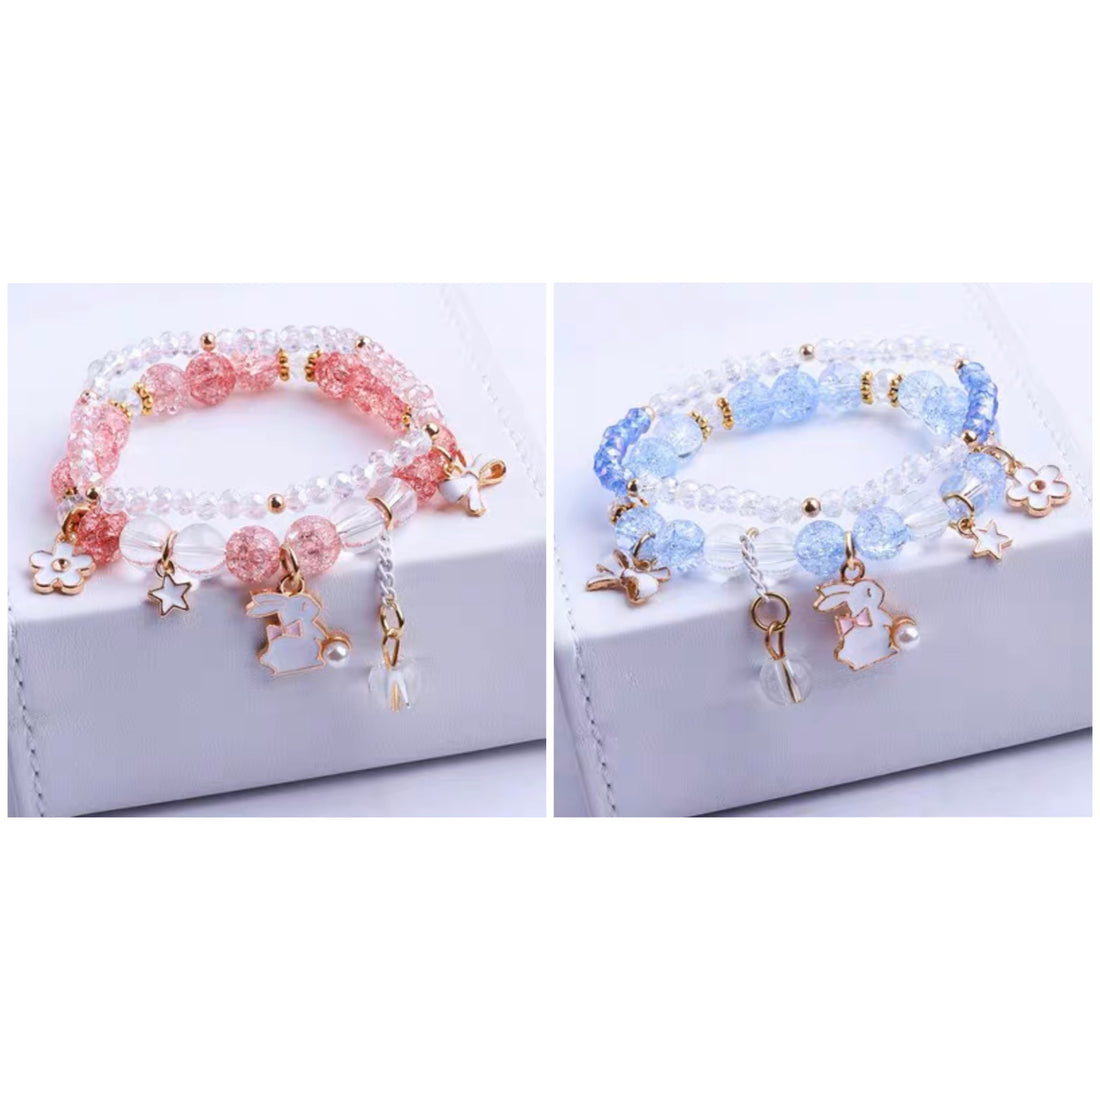 Crystal Beads Bunny Pendant Bracelet